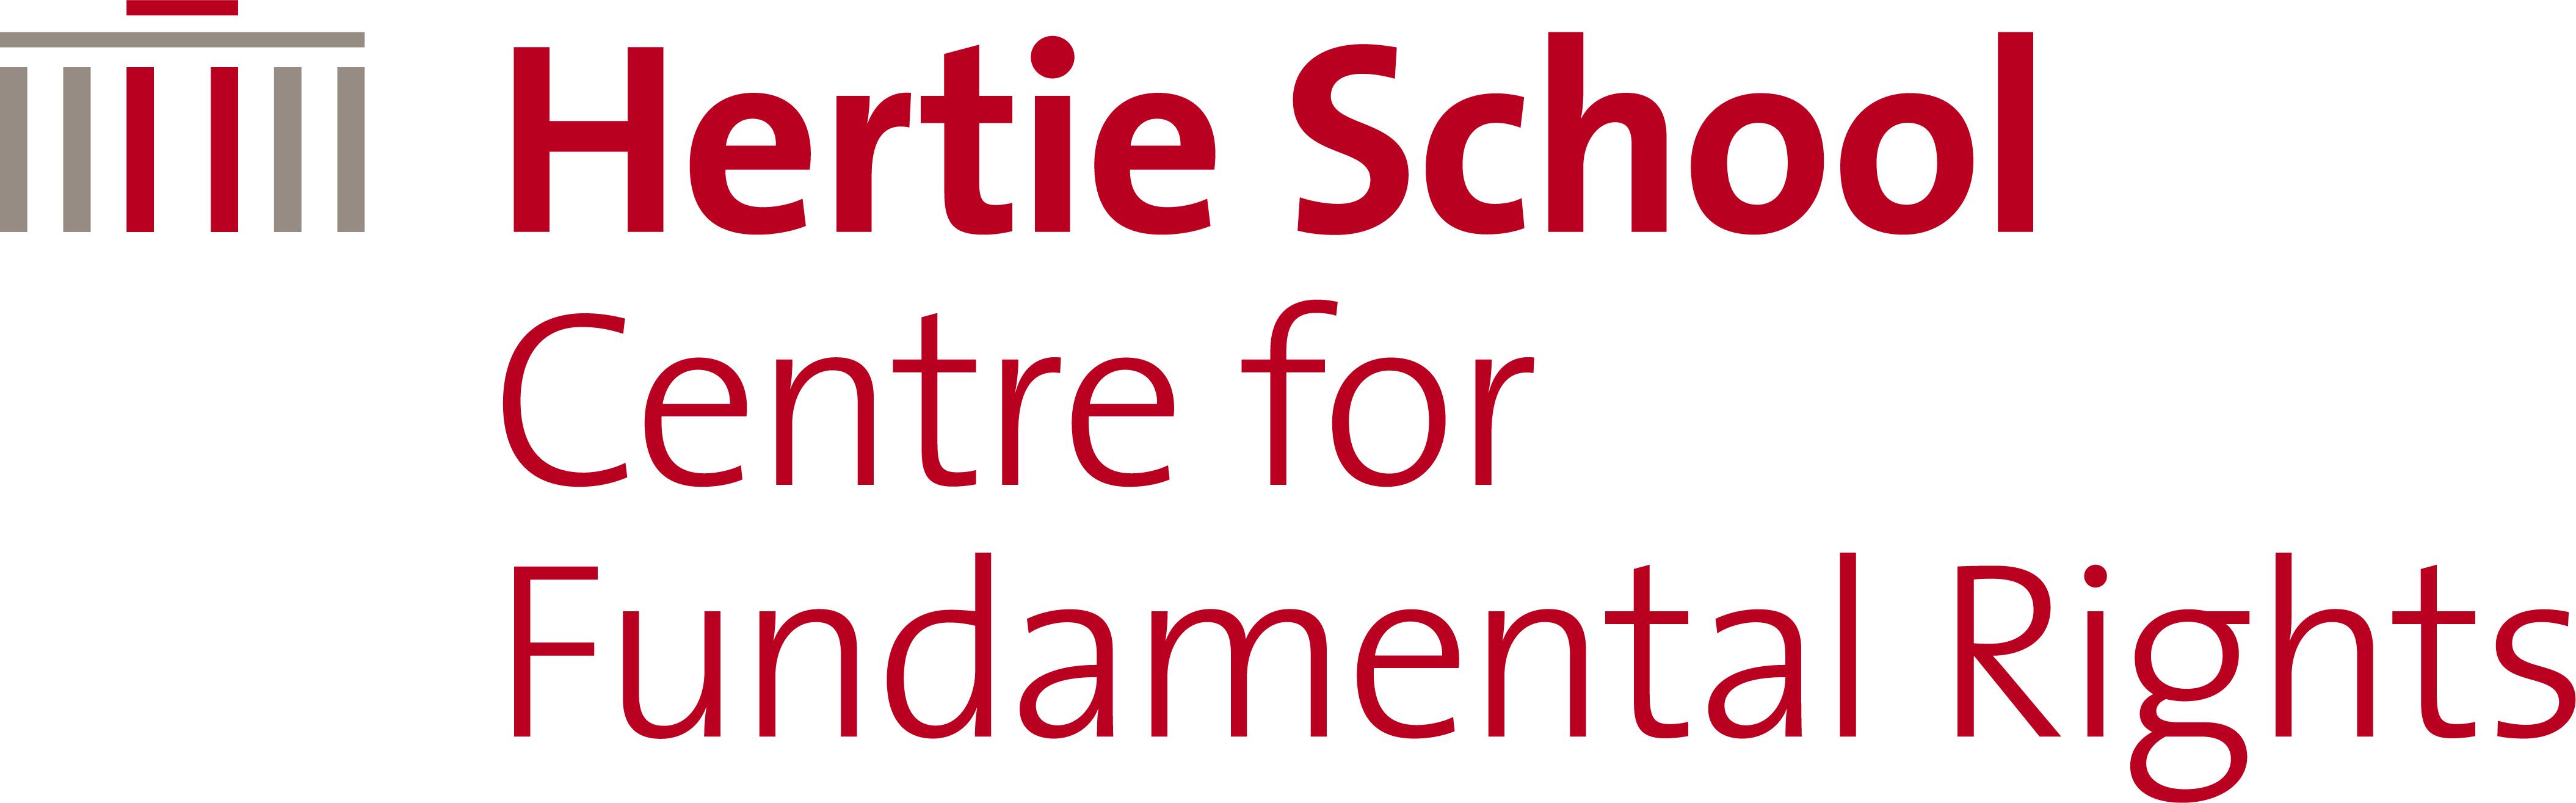 Hertie School Centre for Fundamental Rights Logo